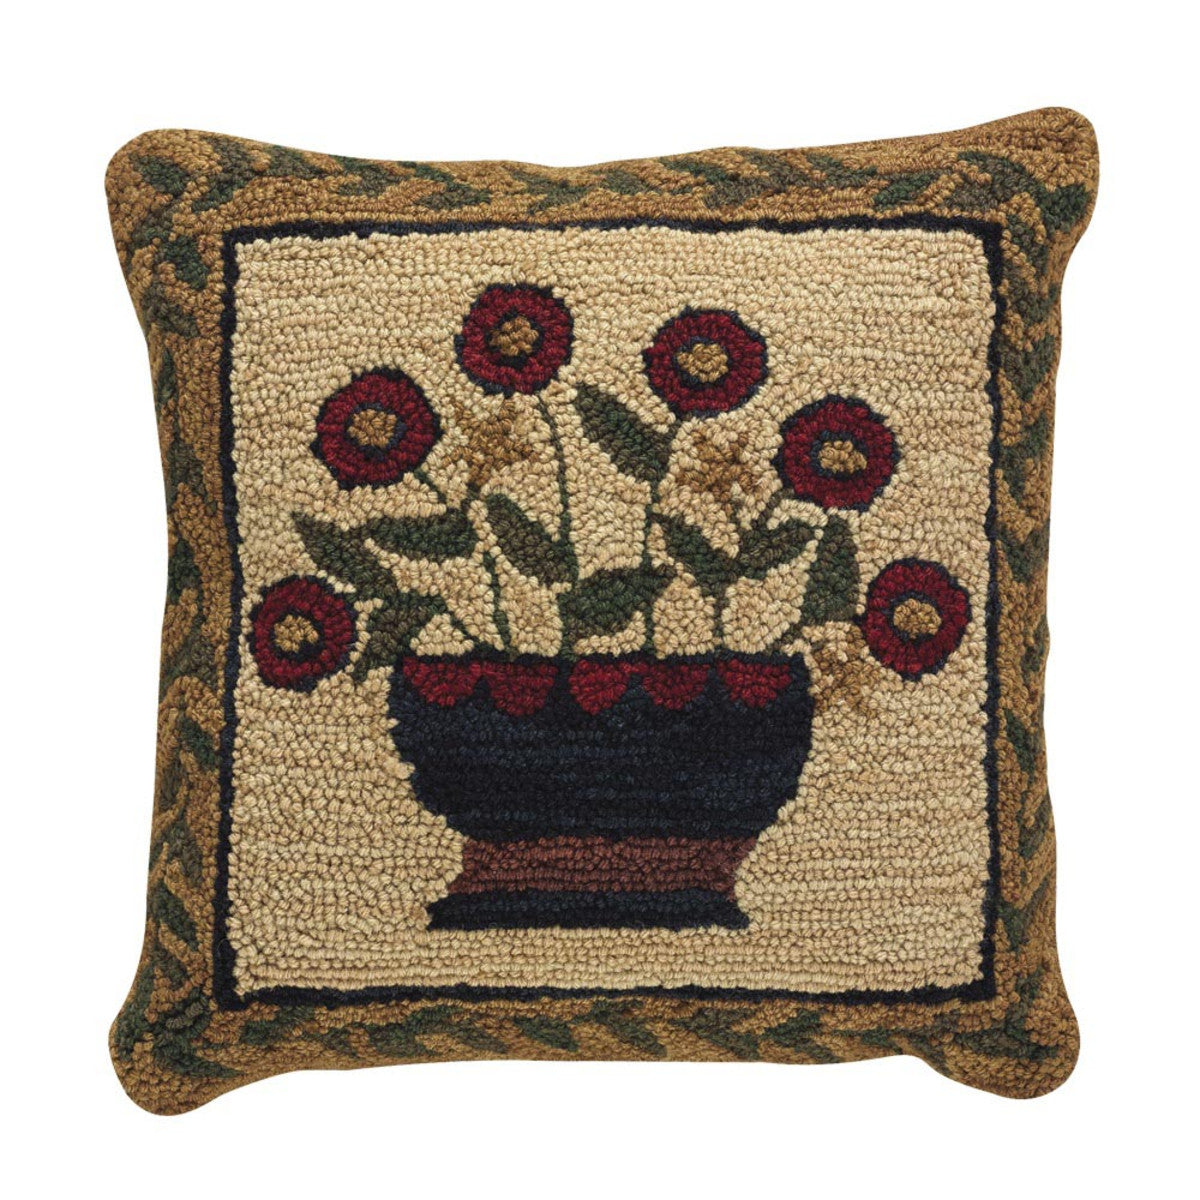 Flower Basket Hooked Pillow Set- Polyester Fill 18"x18" - Park Designs